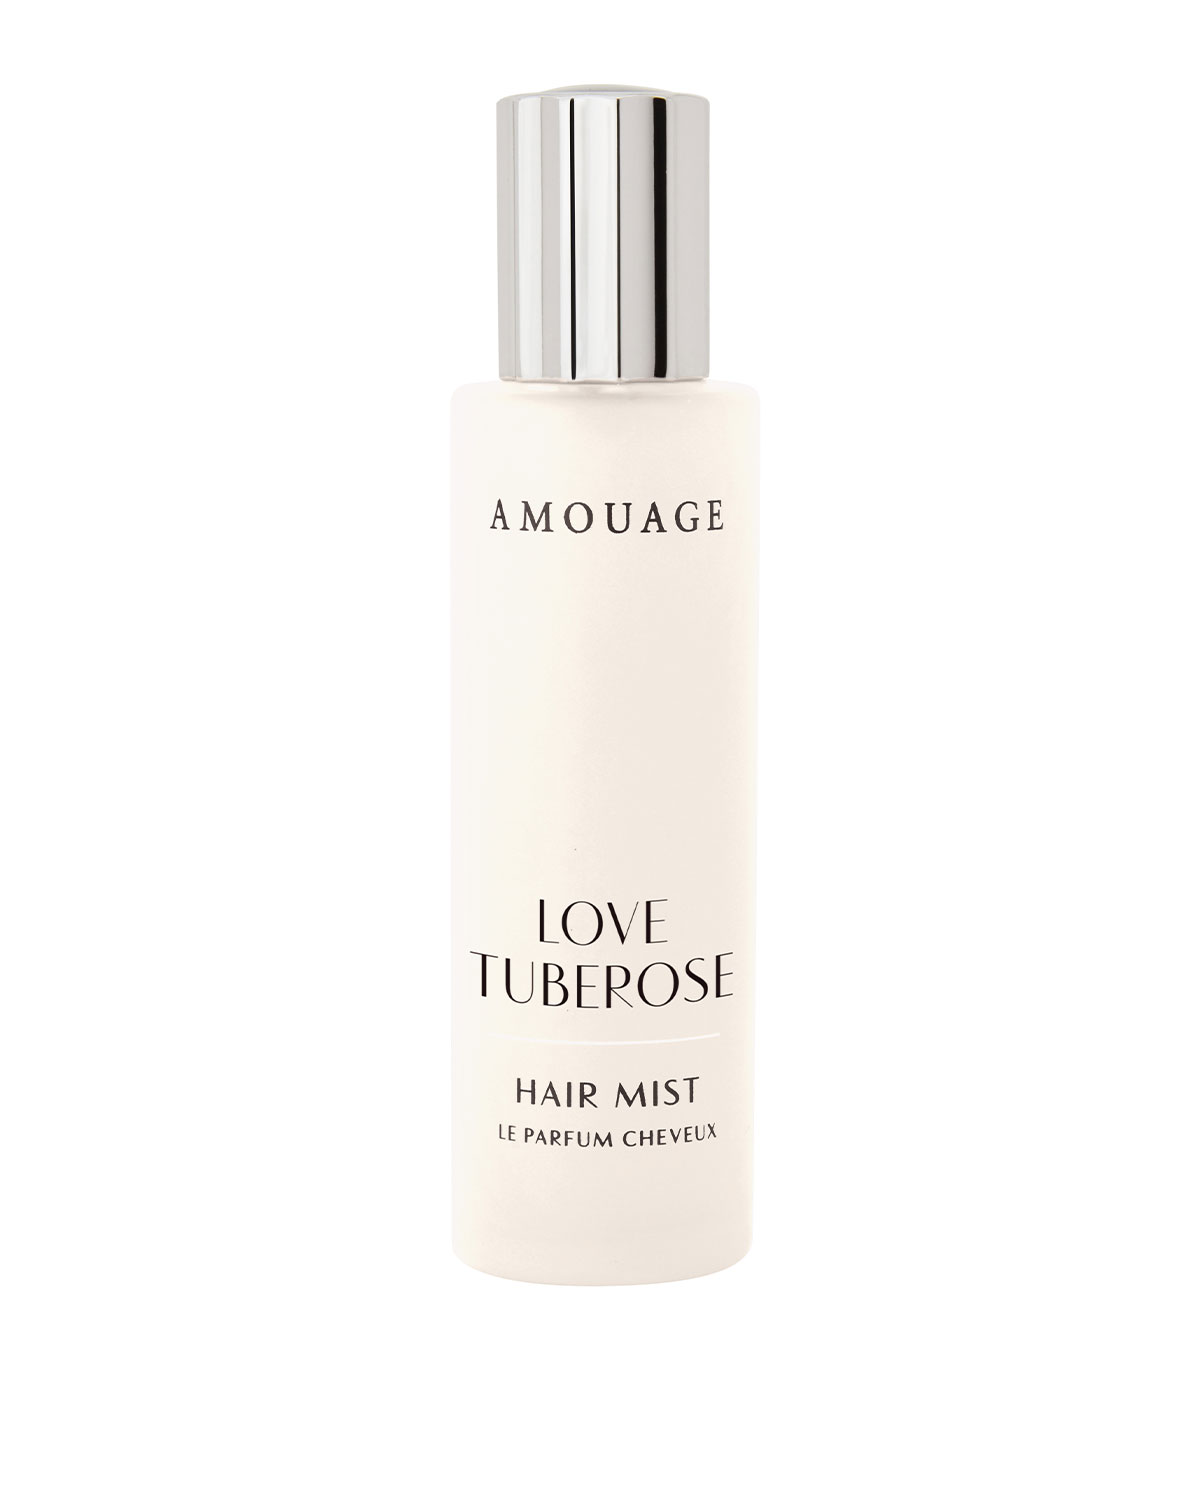 Amouage love tuberose hair mist